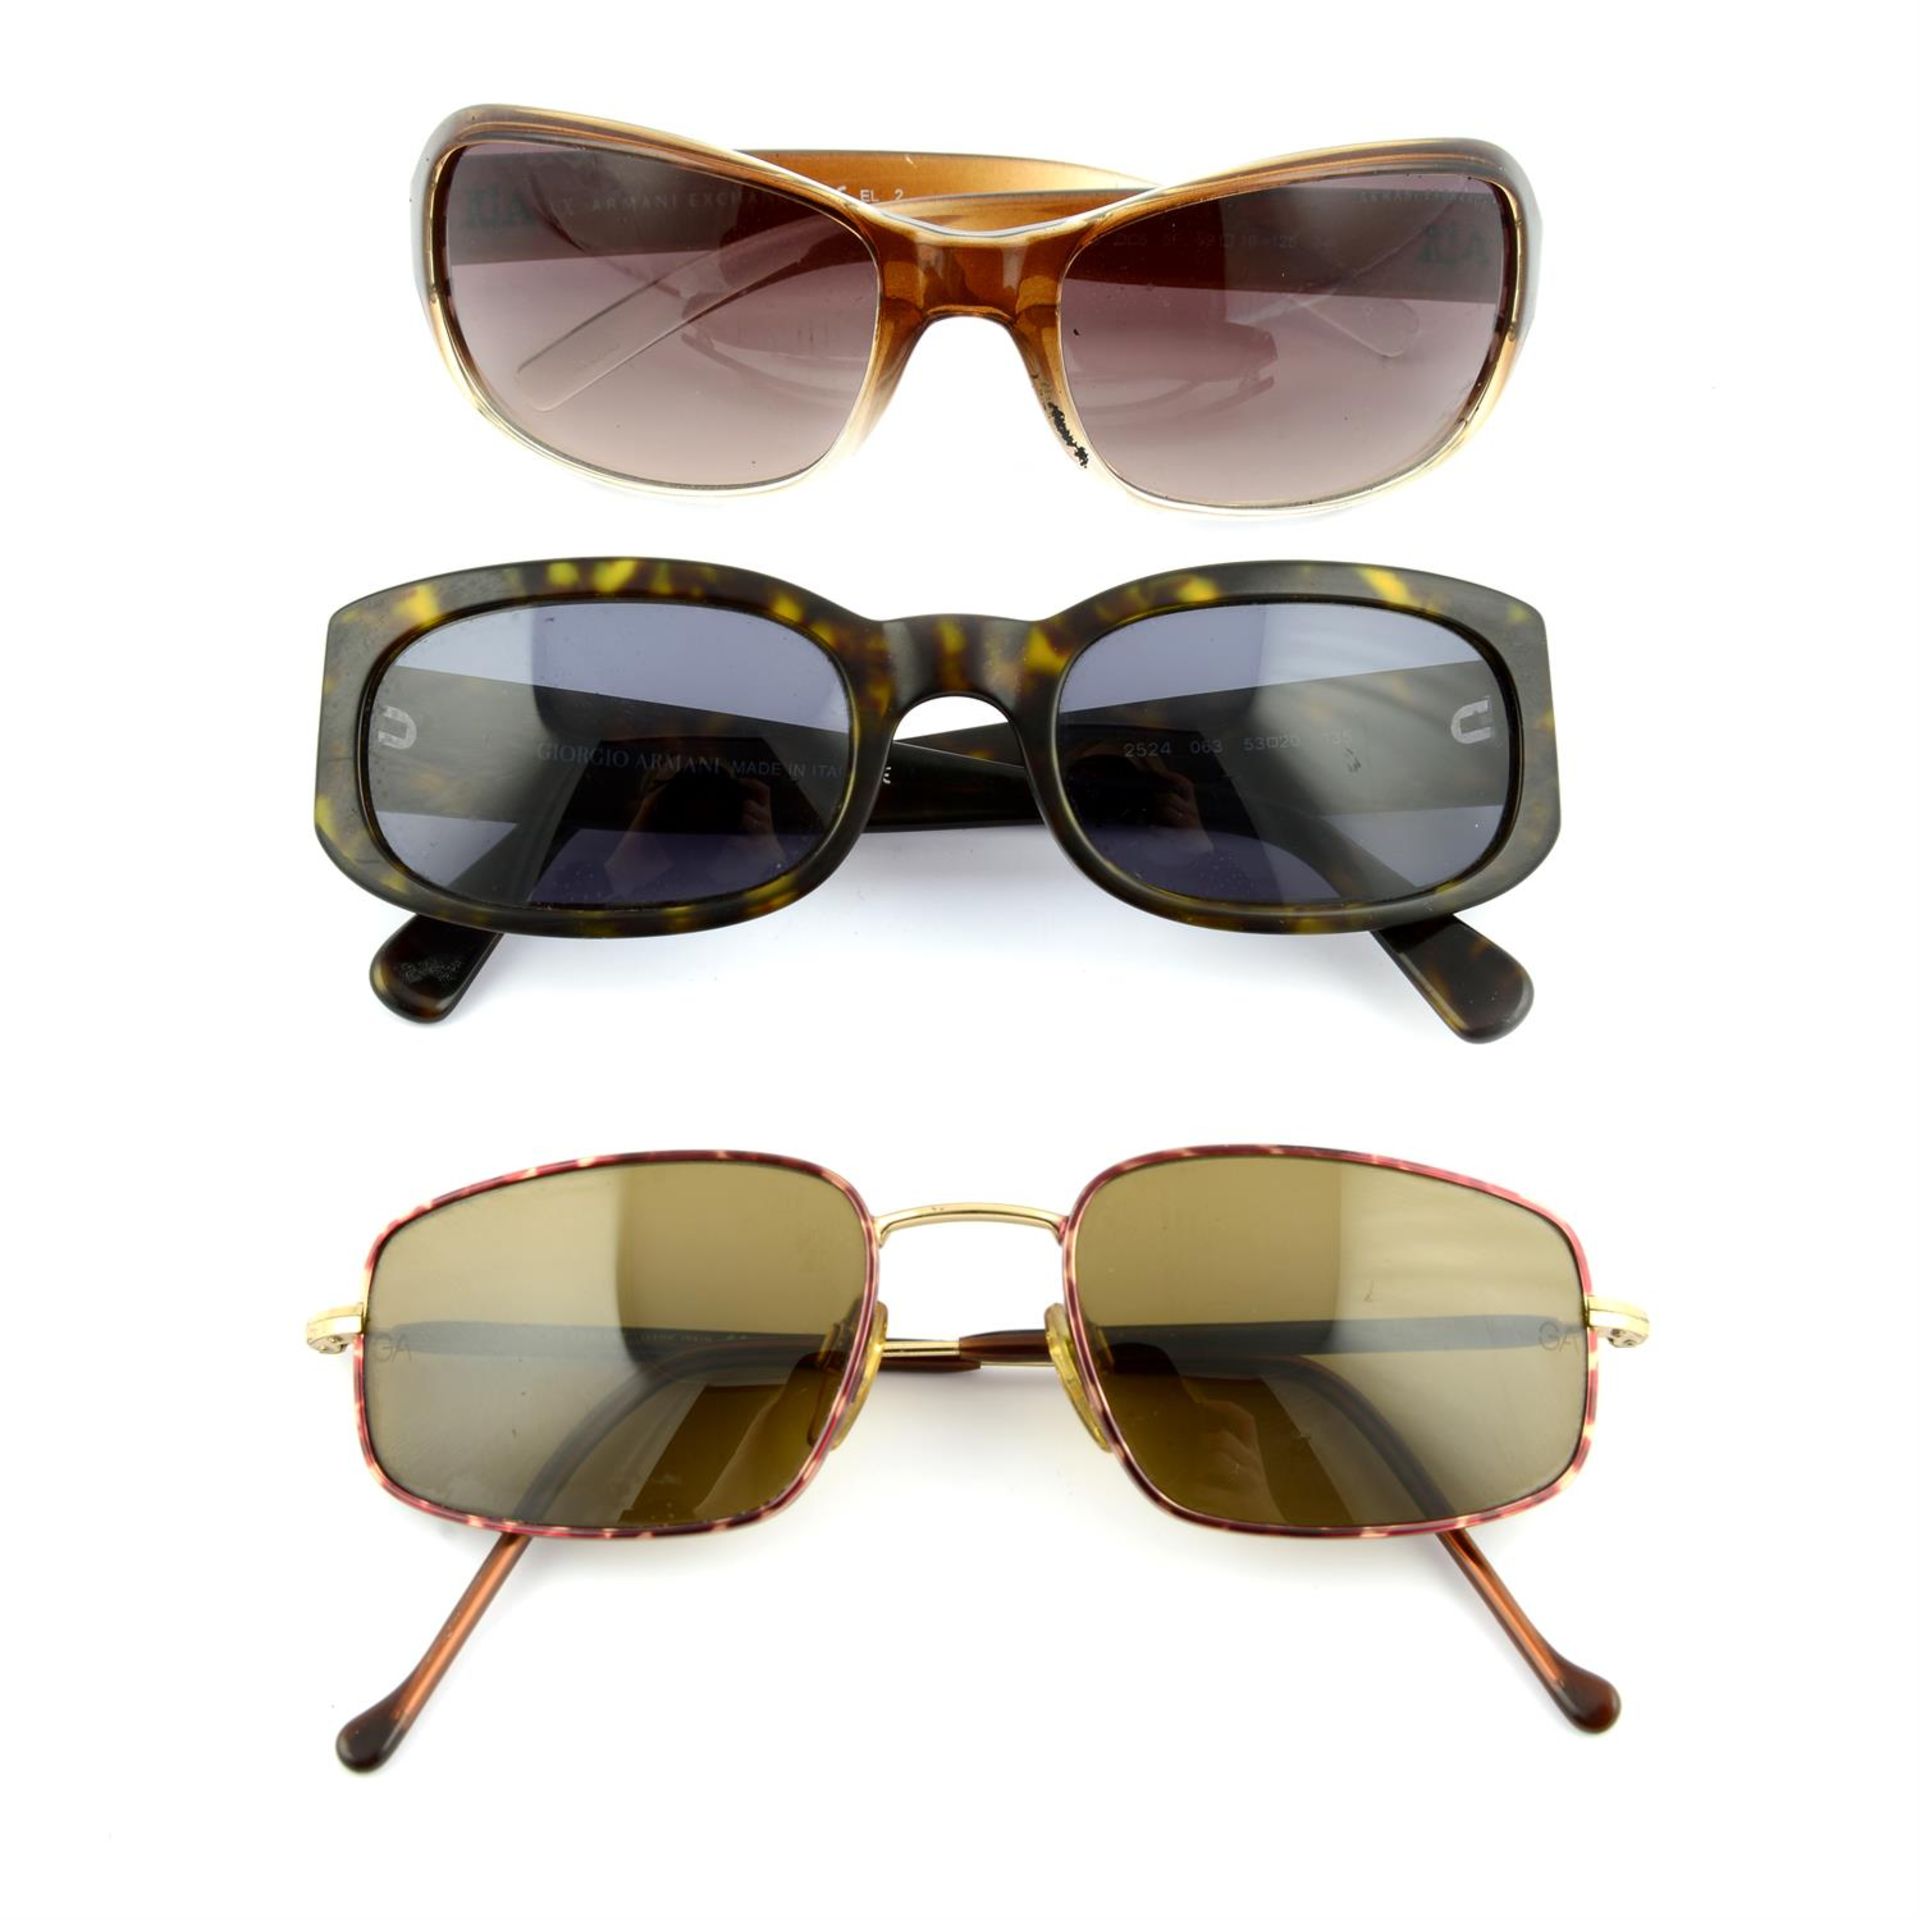 ARMANI - three pairs of sunglasses.